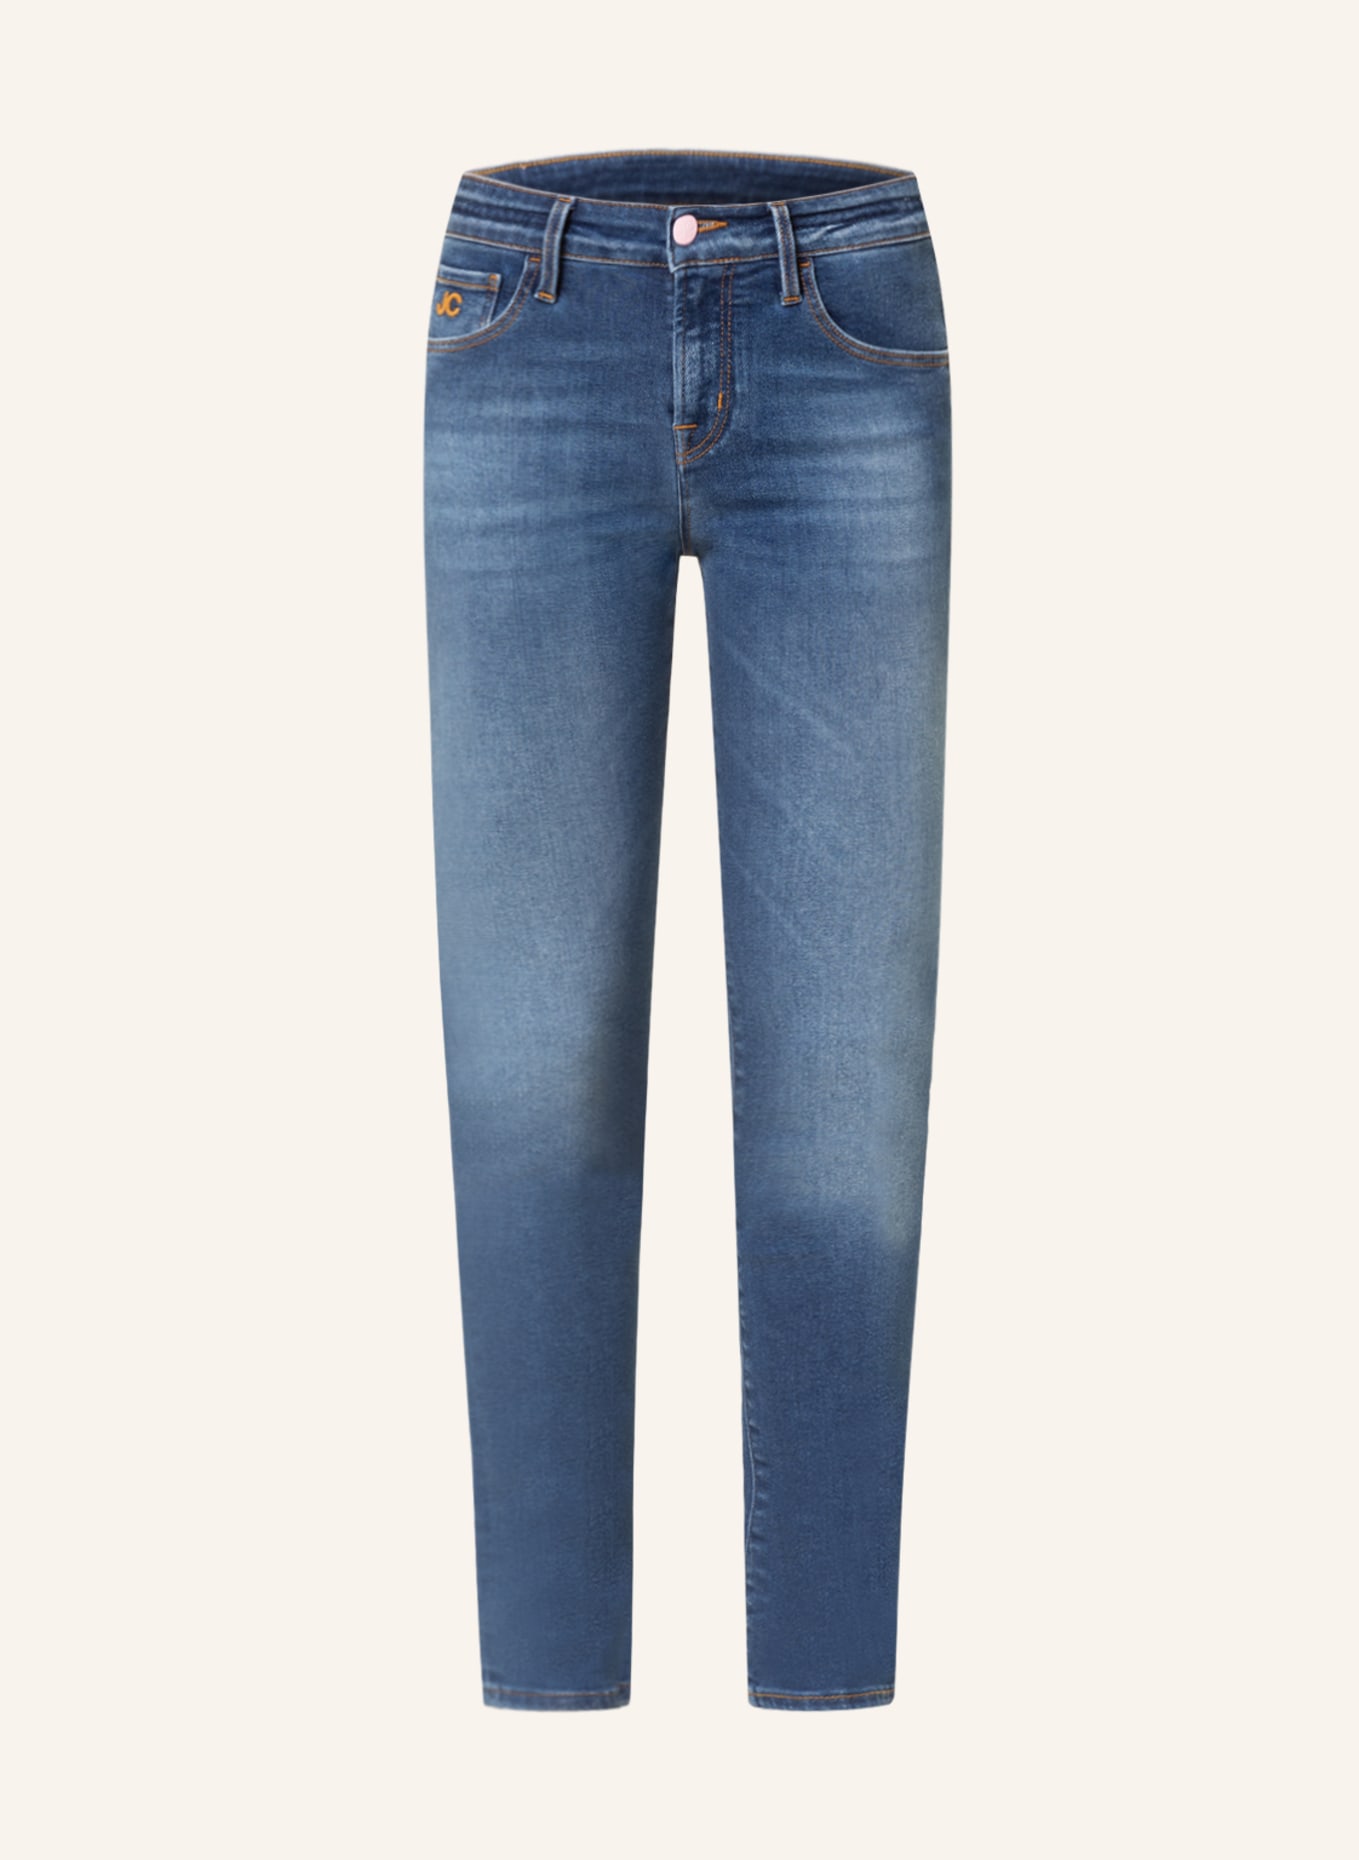 JACOB COHEN Skinny Jeans KIMBERLY, Farbe: 142F denim mittelblau (Bild 1)